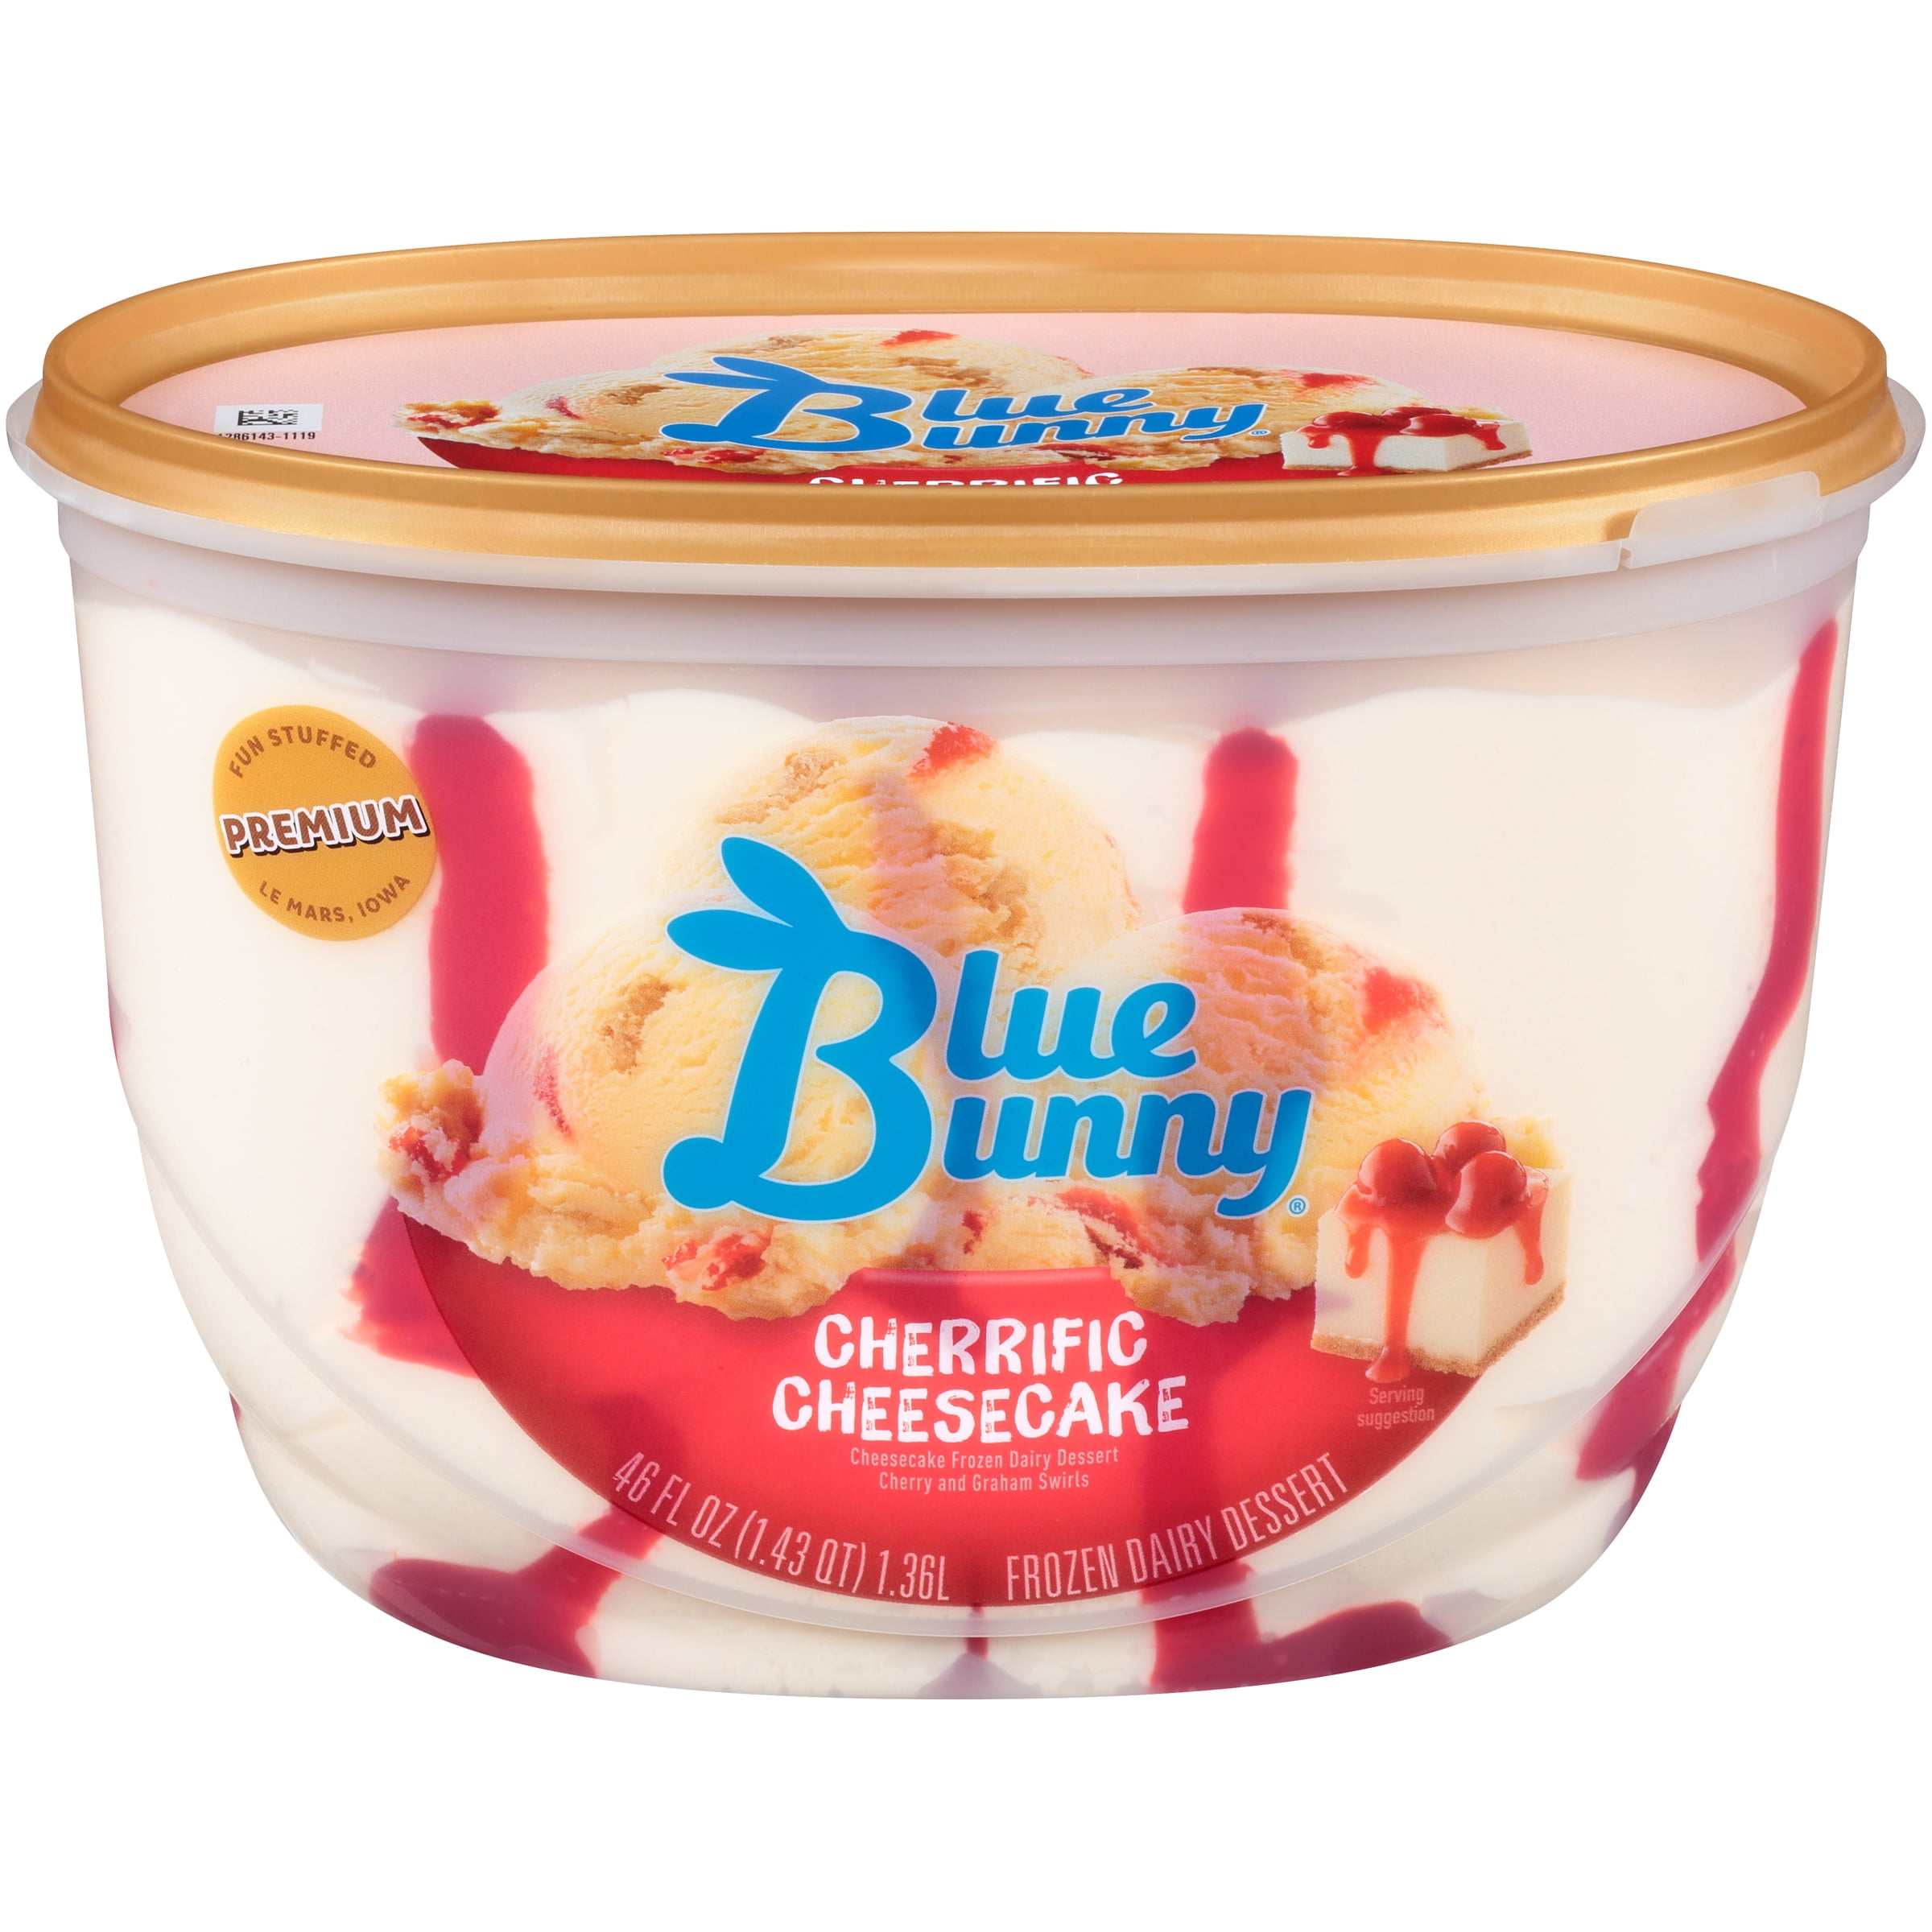 Blue Bunny Cherrific Cheesecake Frozen Dairy Dessert 46 Fl Oz Walmart Com Walmart Com